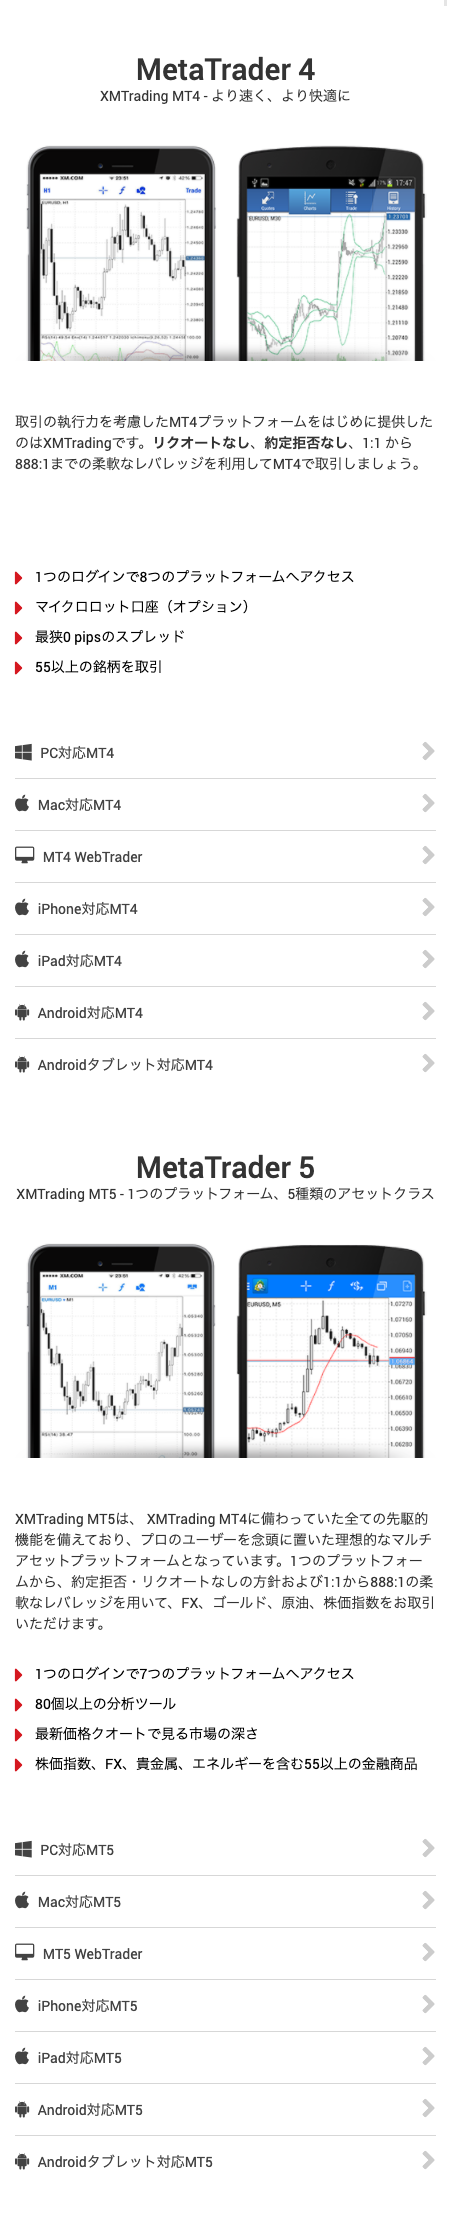 XMのMT4/MT5ダウンロードページのスマートフォン版